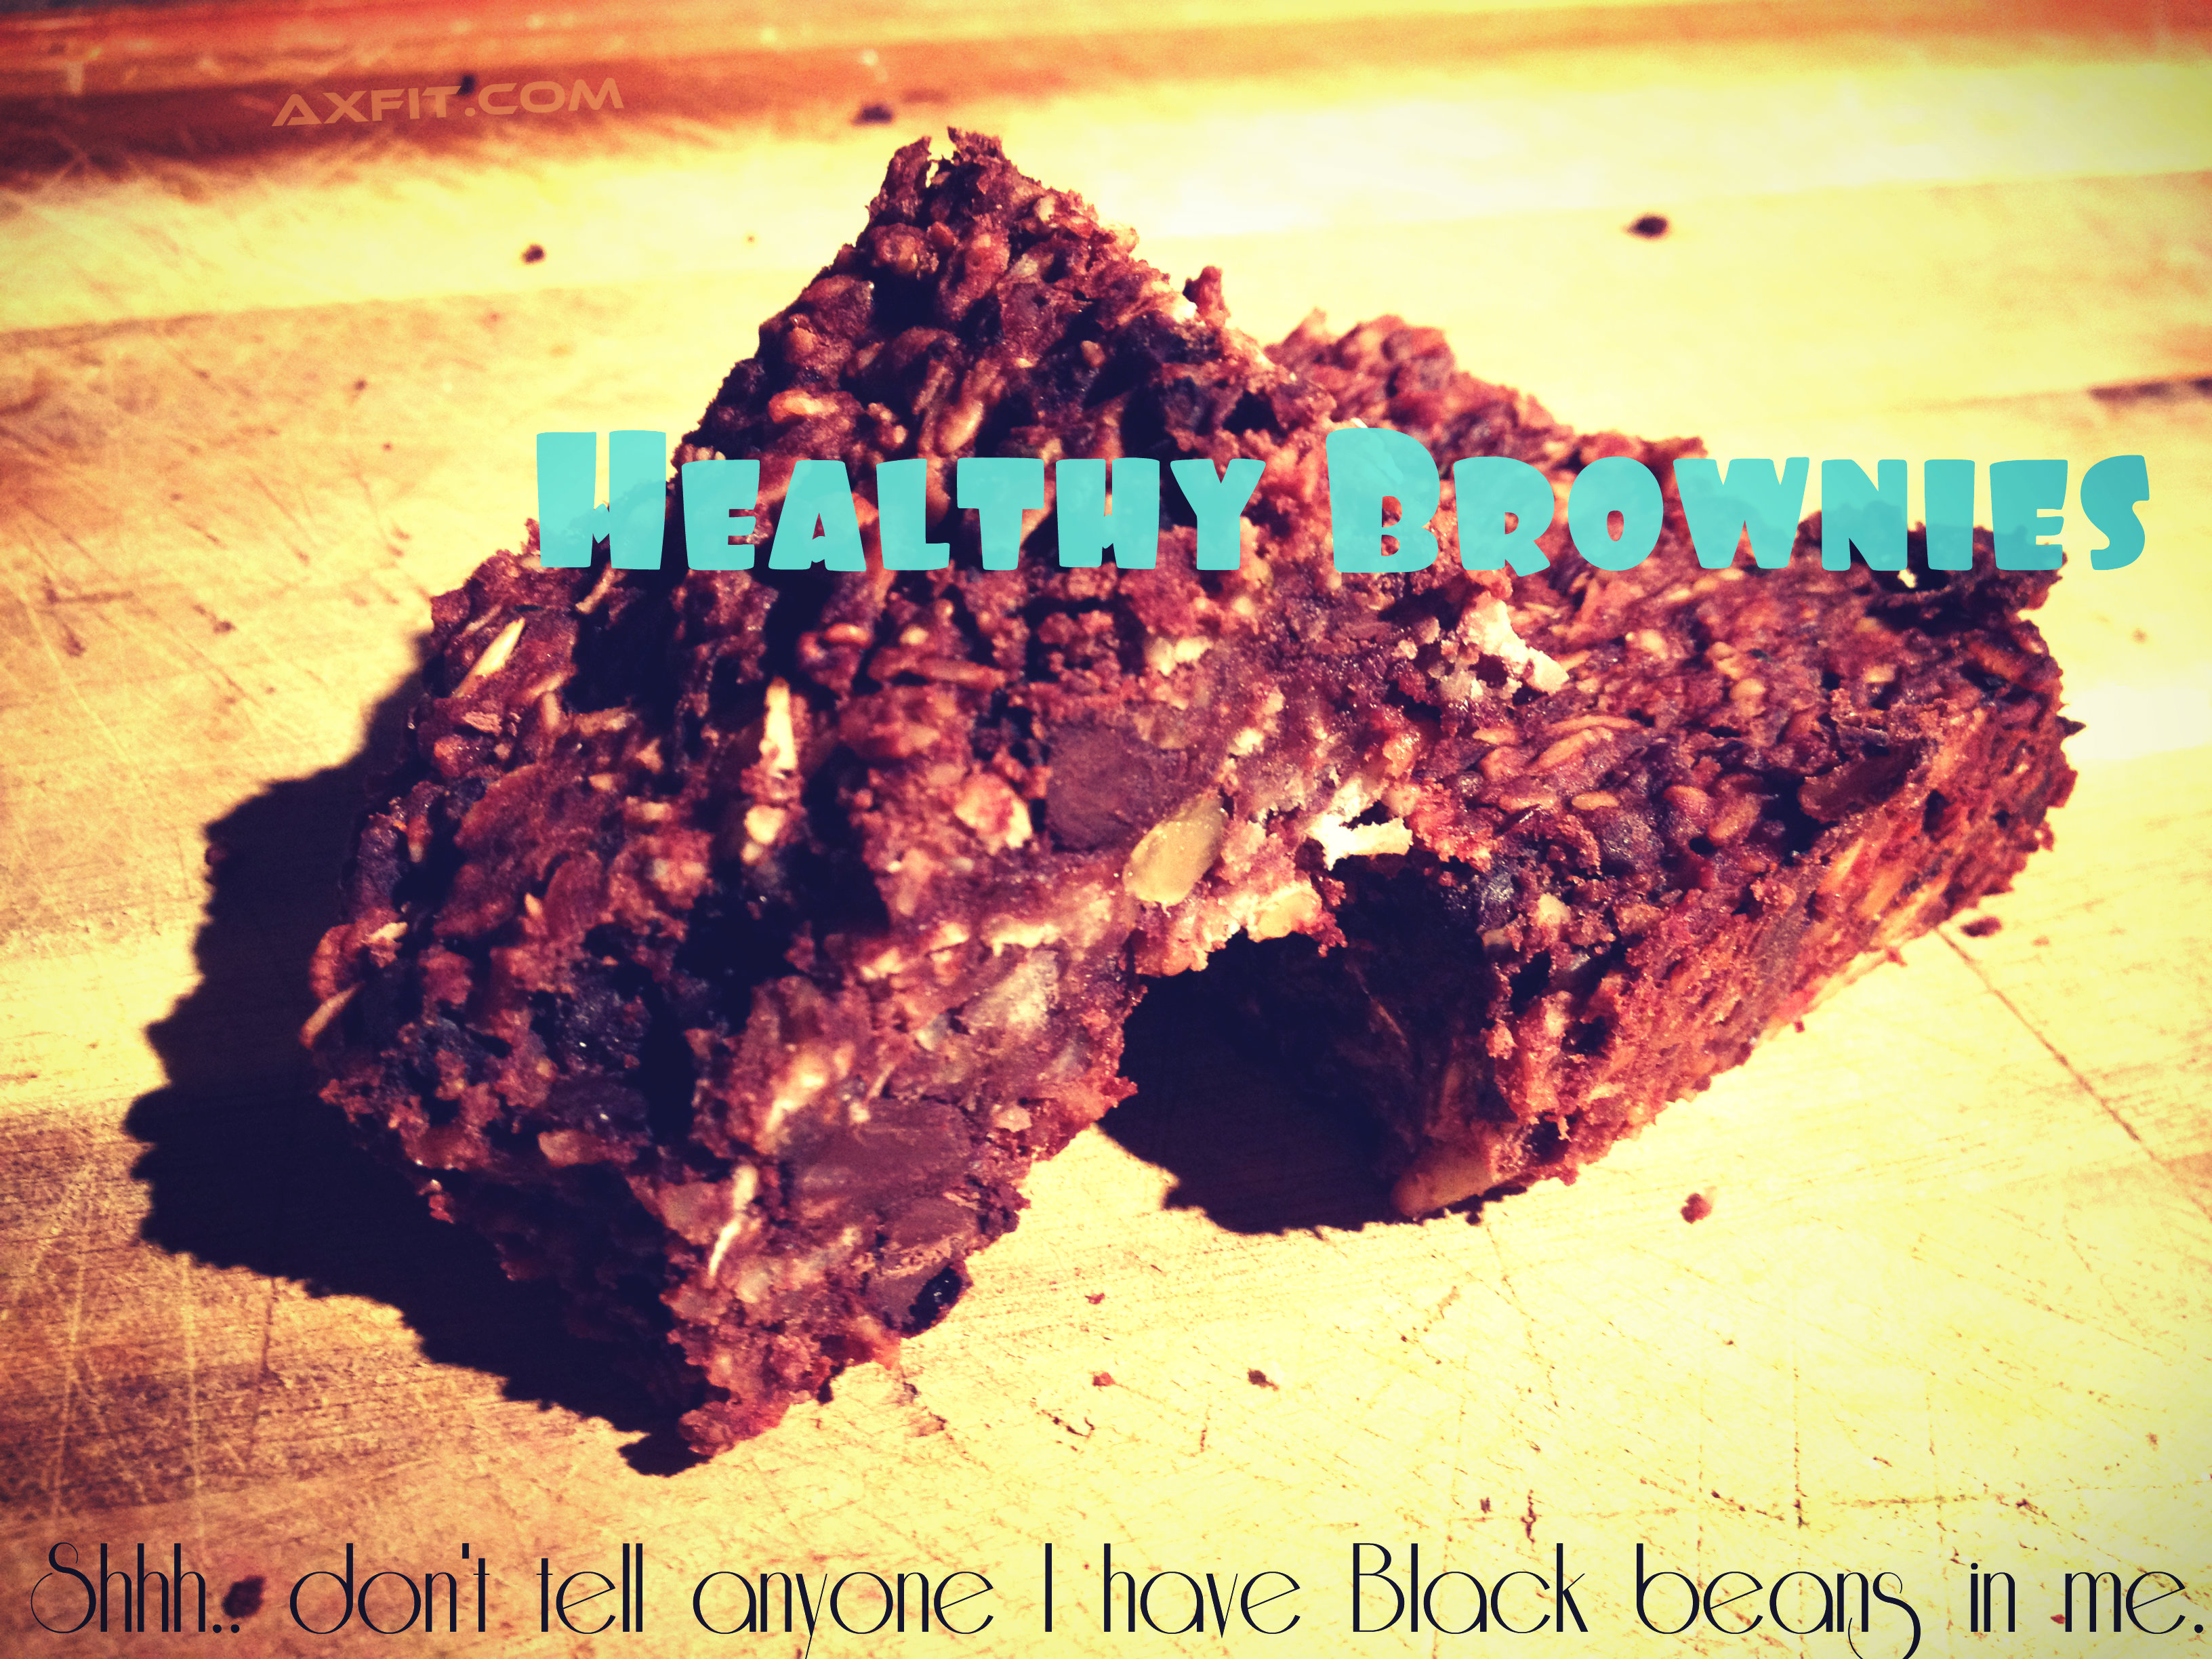 black bean brownie recipe